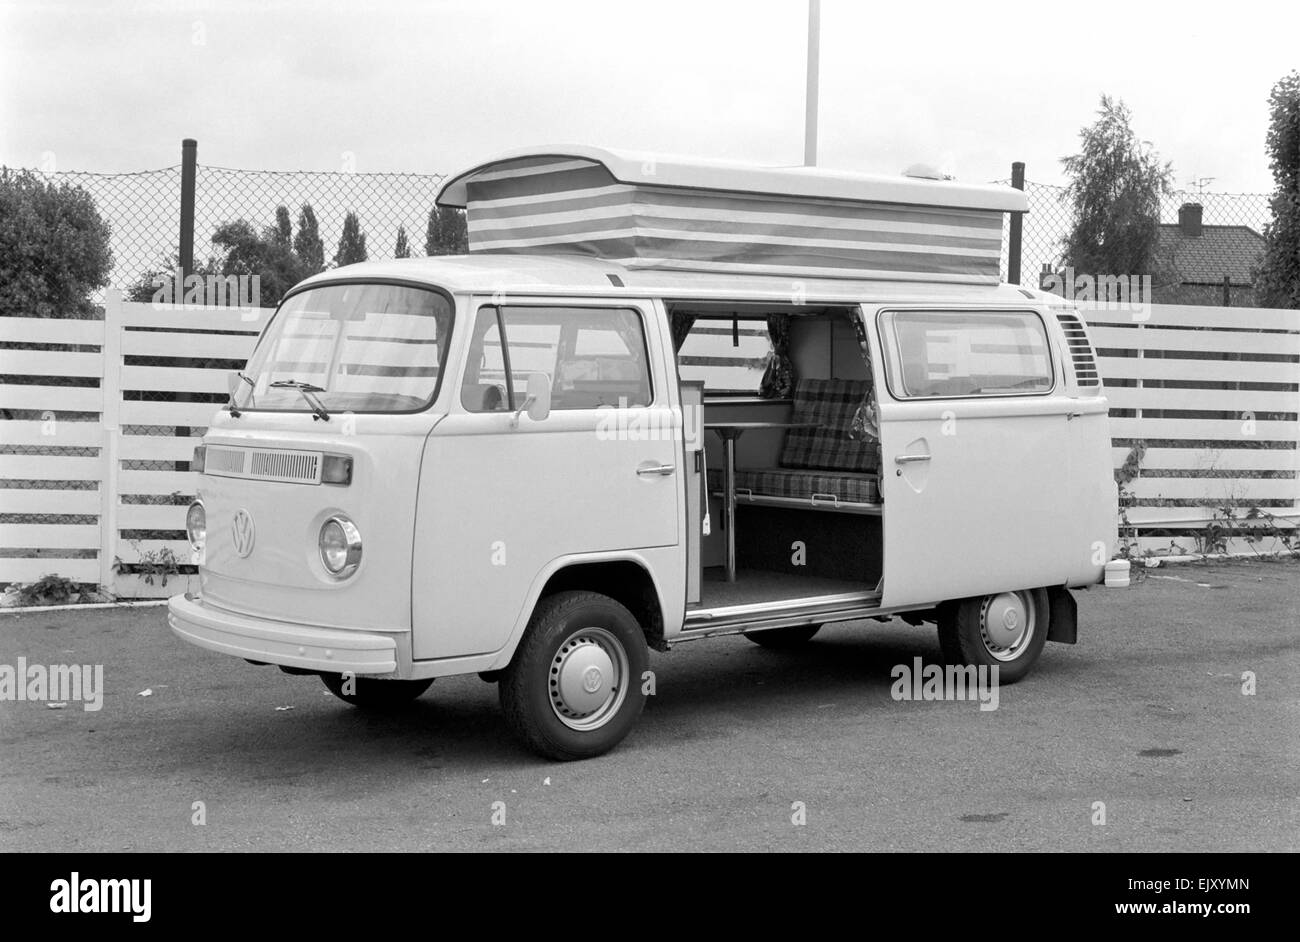 Volkswagen Devon Moonraker autocaravan. Agosto 1978 78-3944-002.Caption locale *** planman - - 03/02/2010 Foto Stock